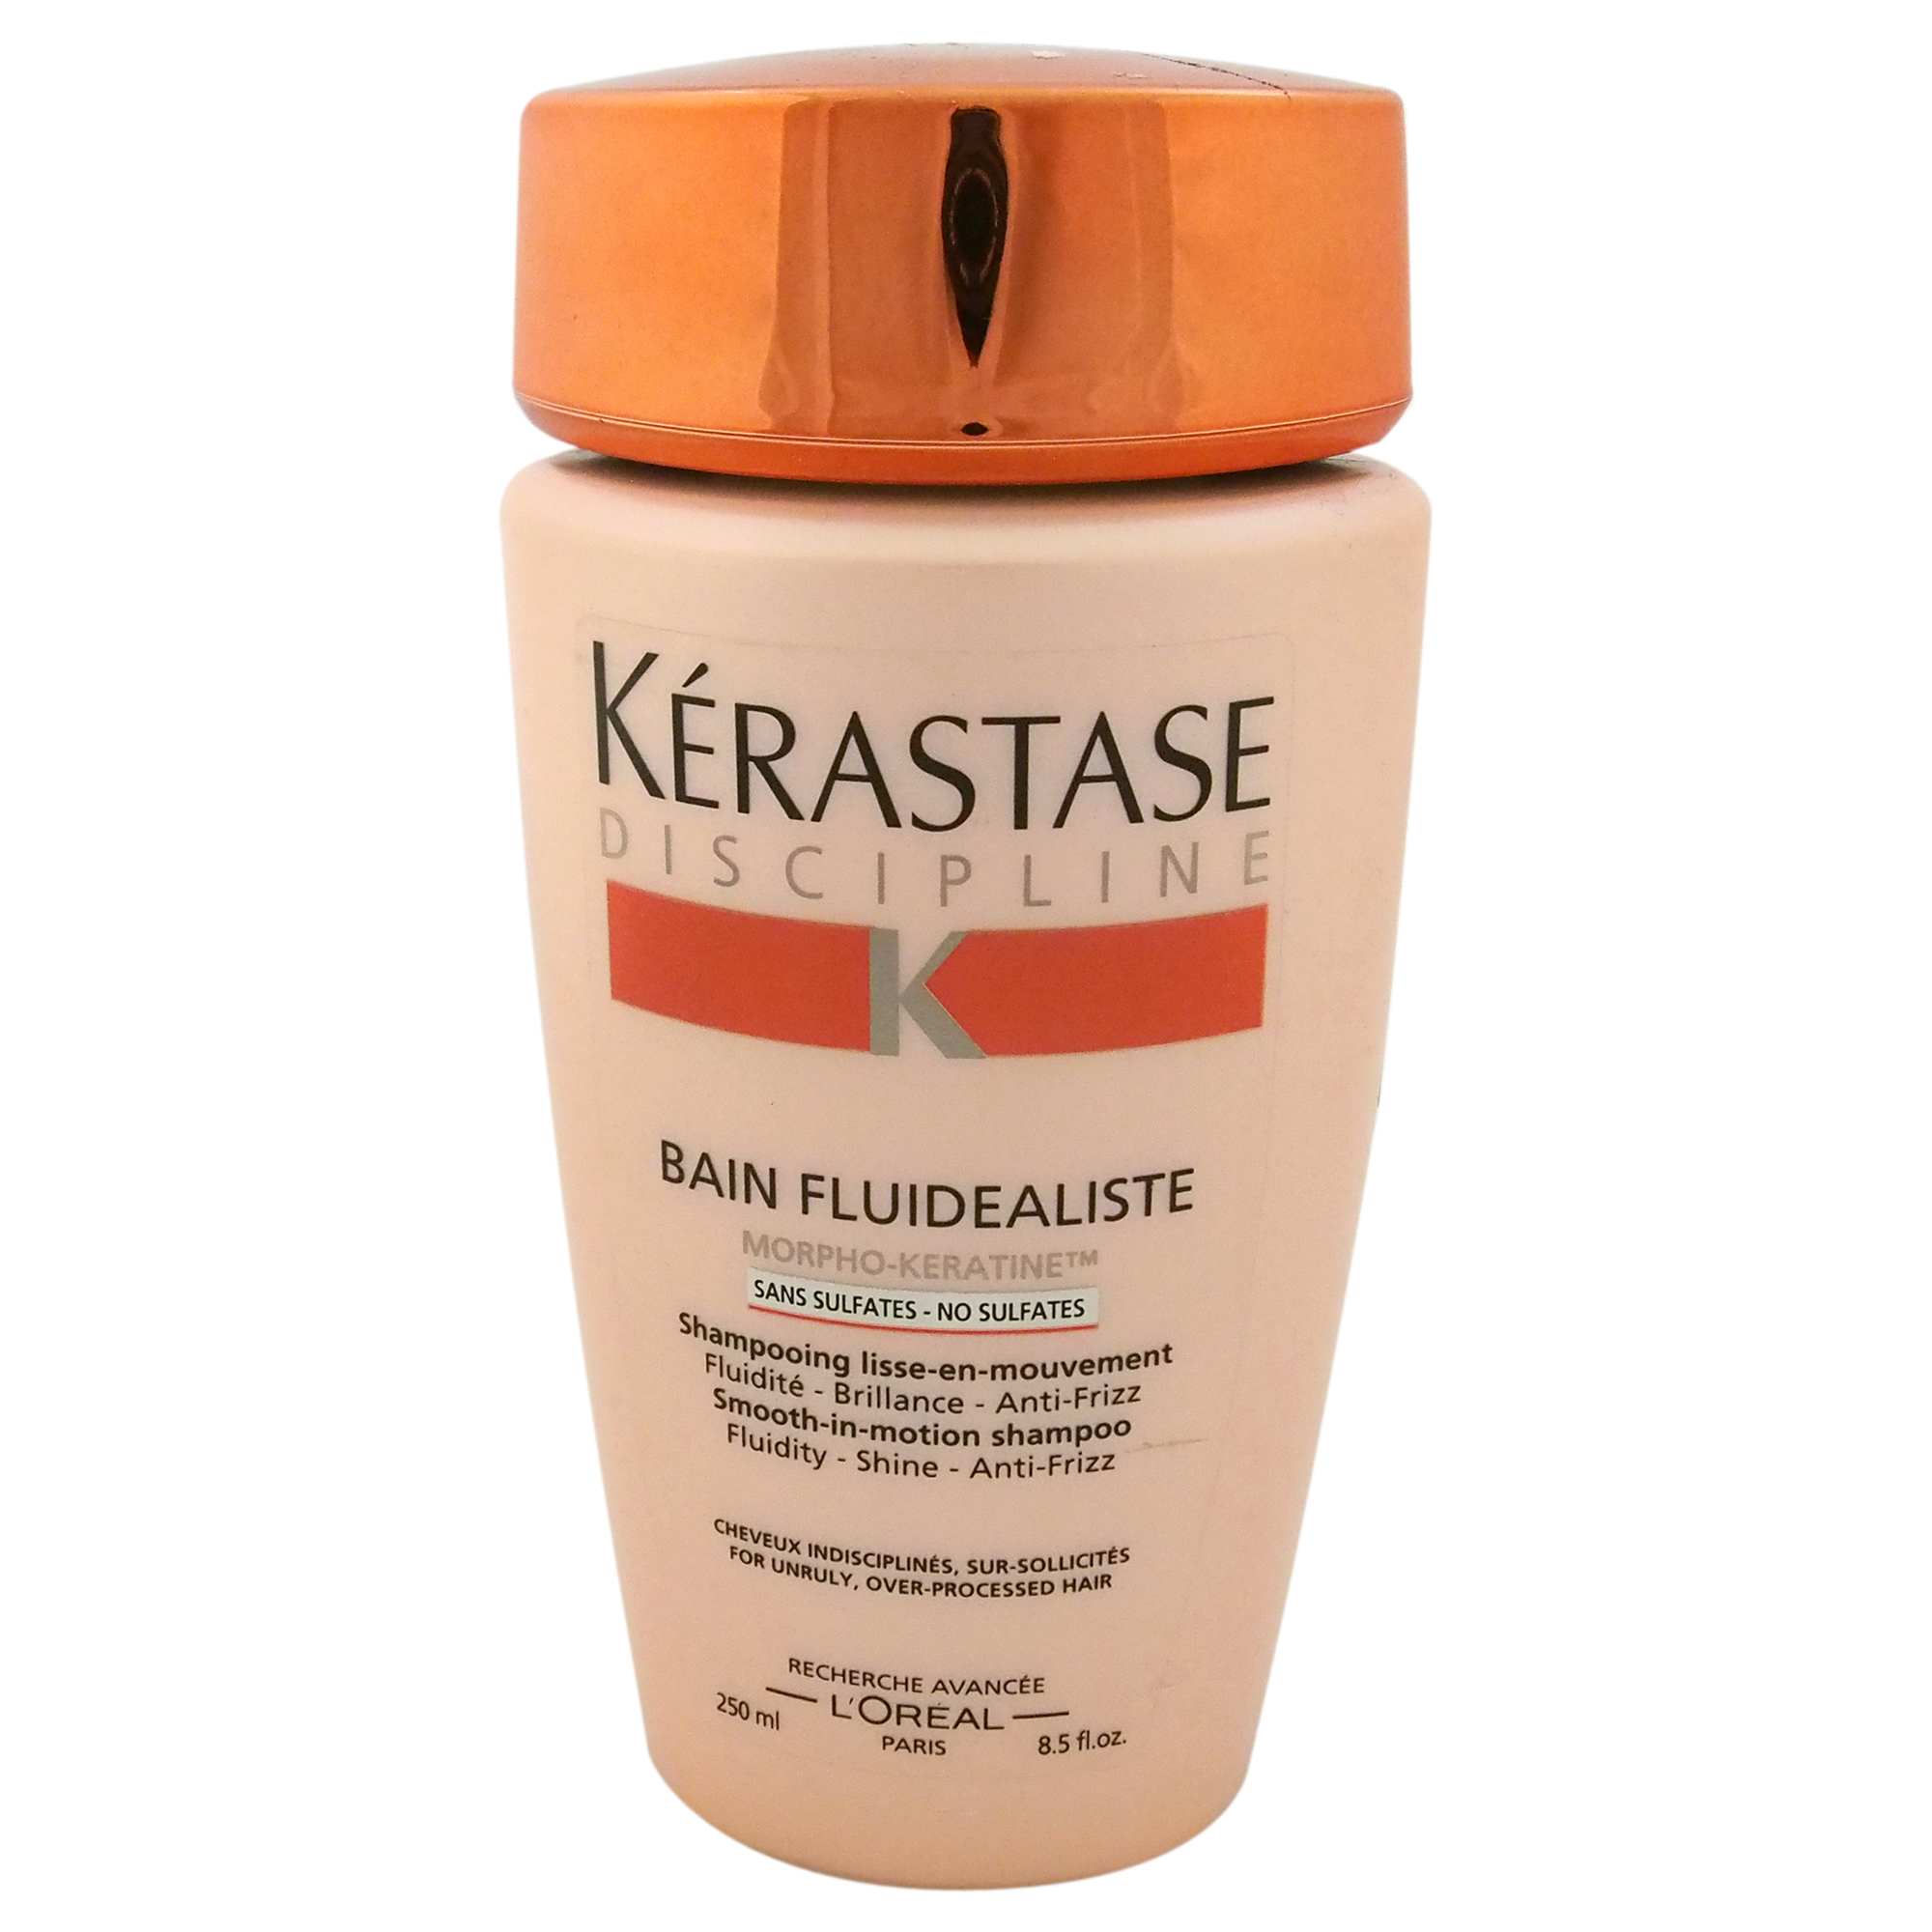 KERASTASE Discipline Bain Fluidealiste No Sulfates Smooth-in-Motion Shampoo